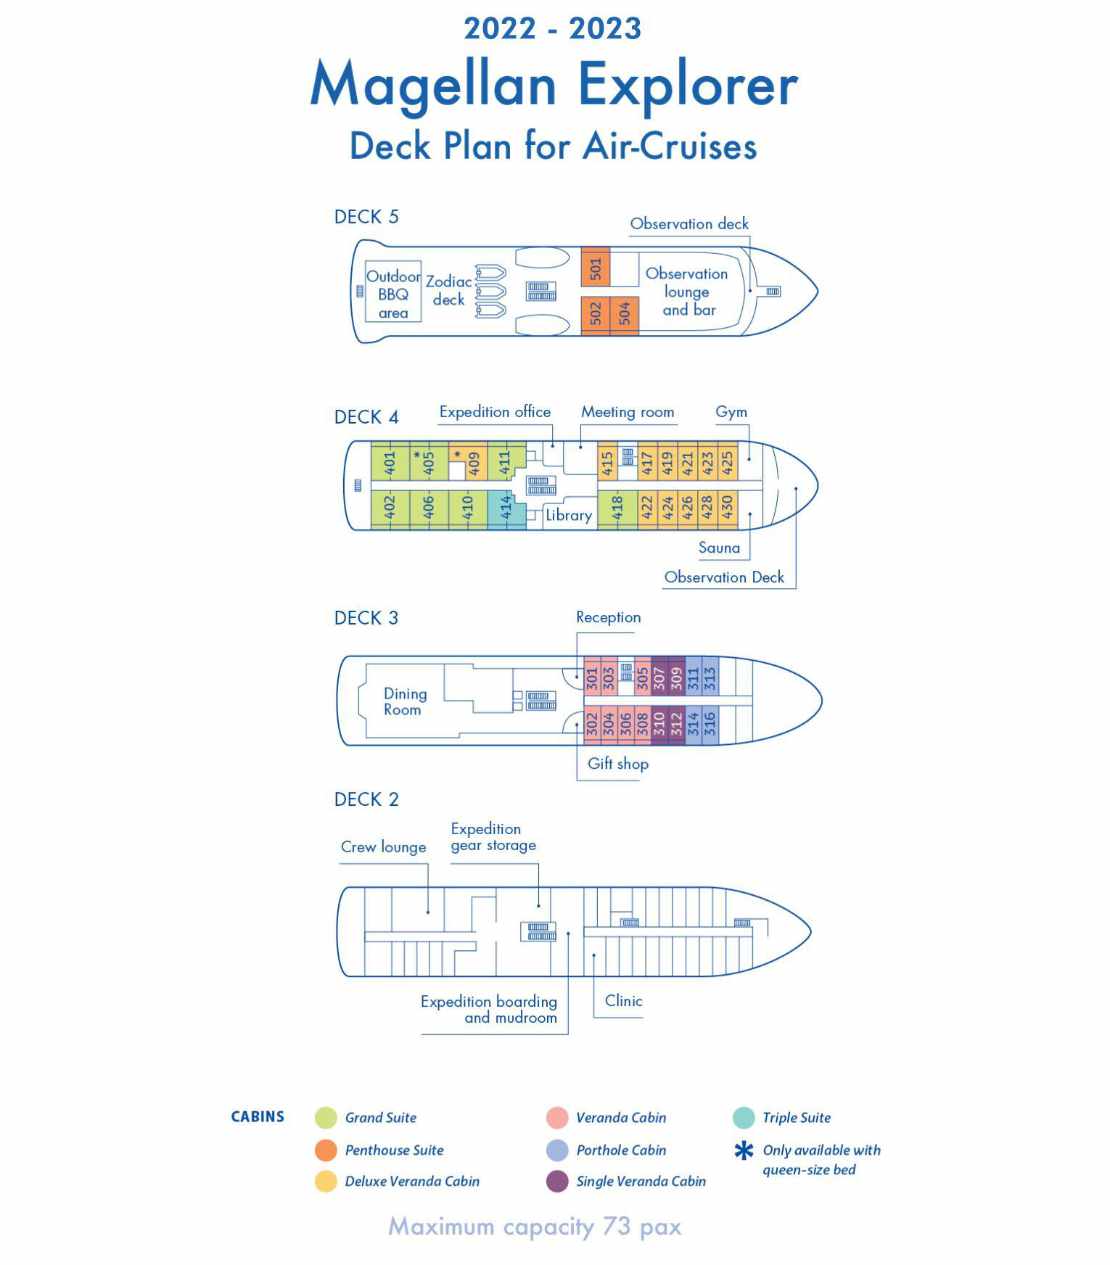 Plan de pont du Magellan Explorer